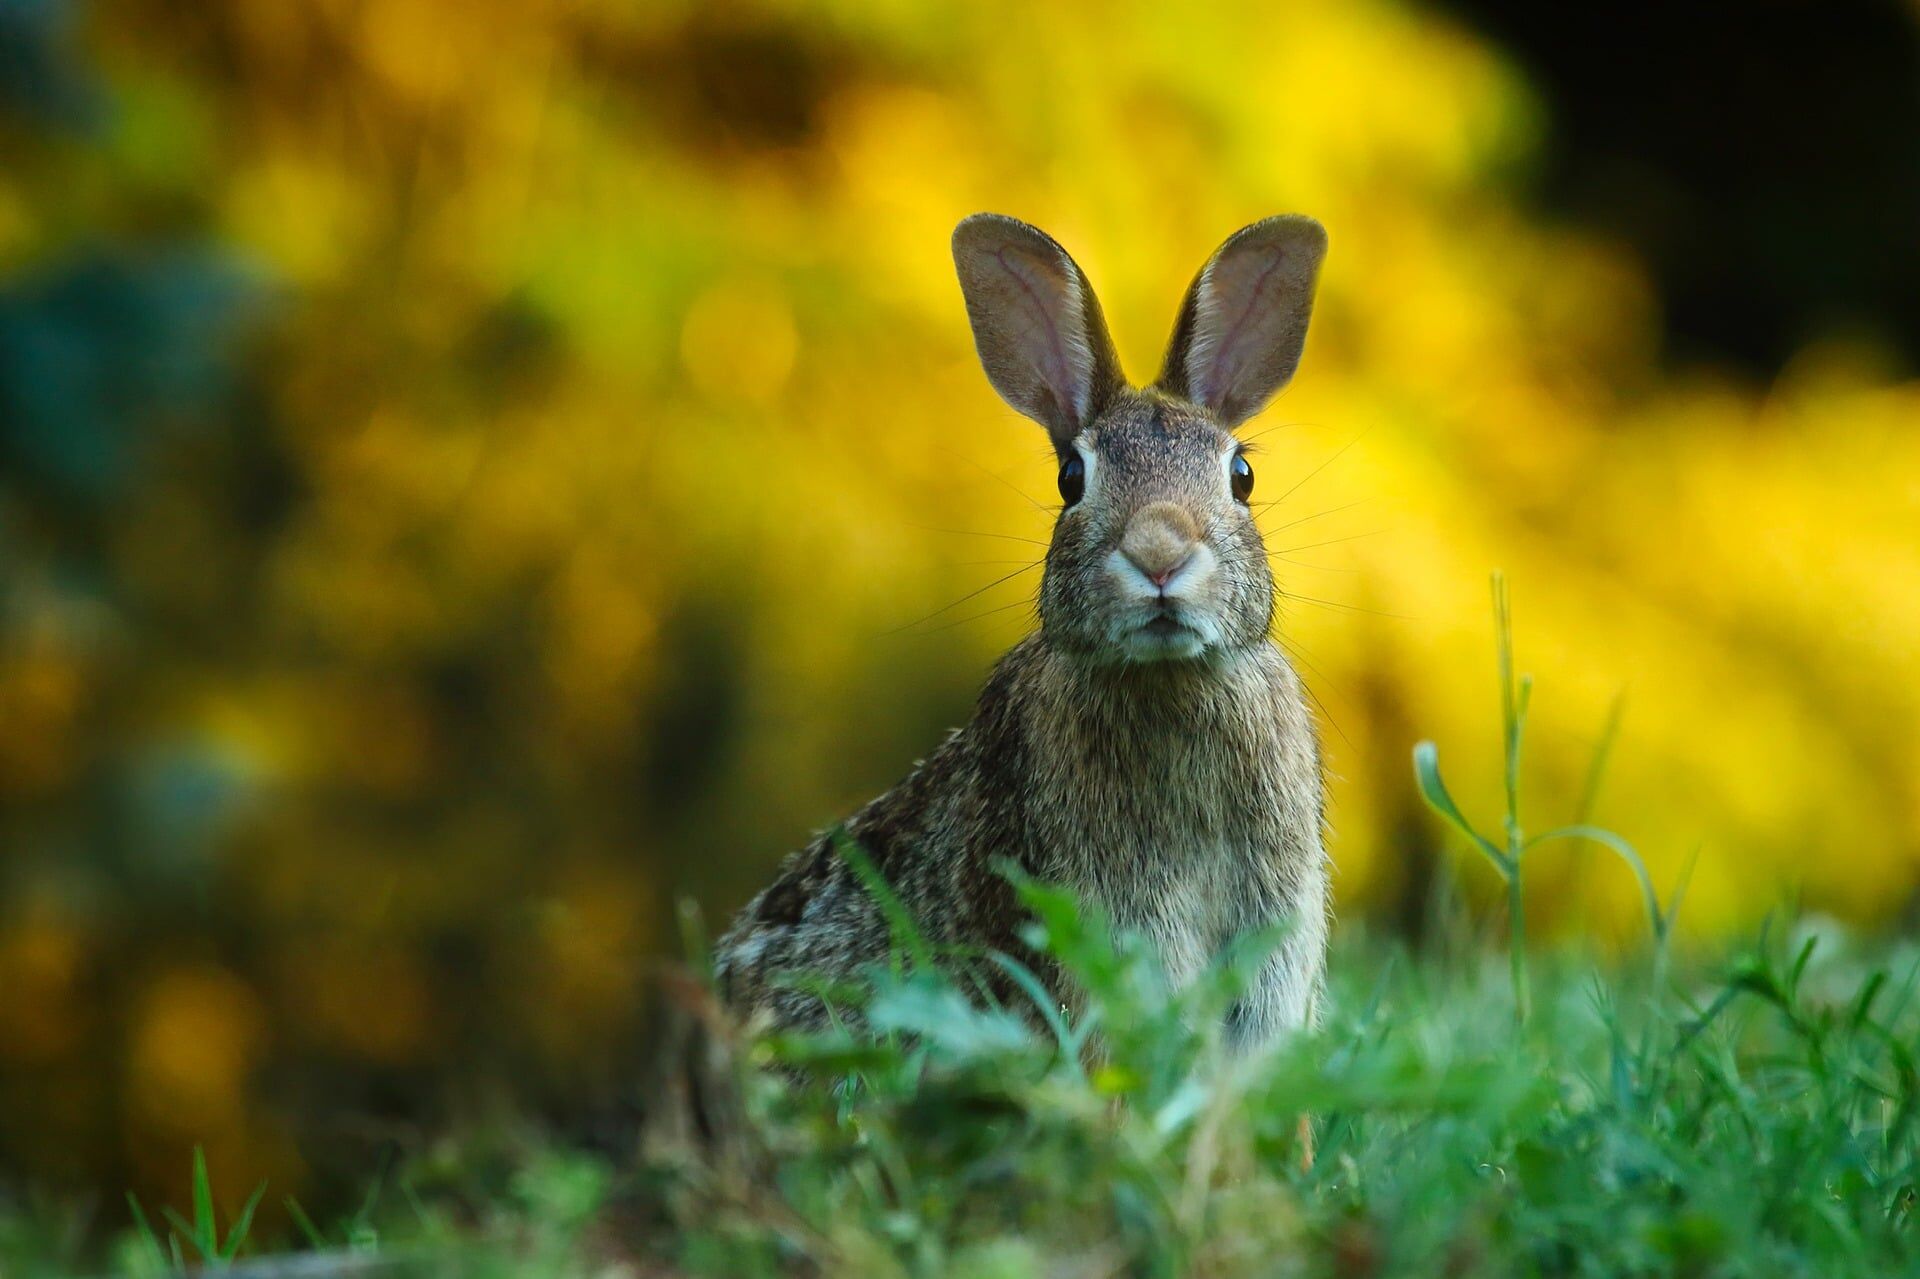 Rabbit staring at camera stood on lawn